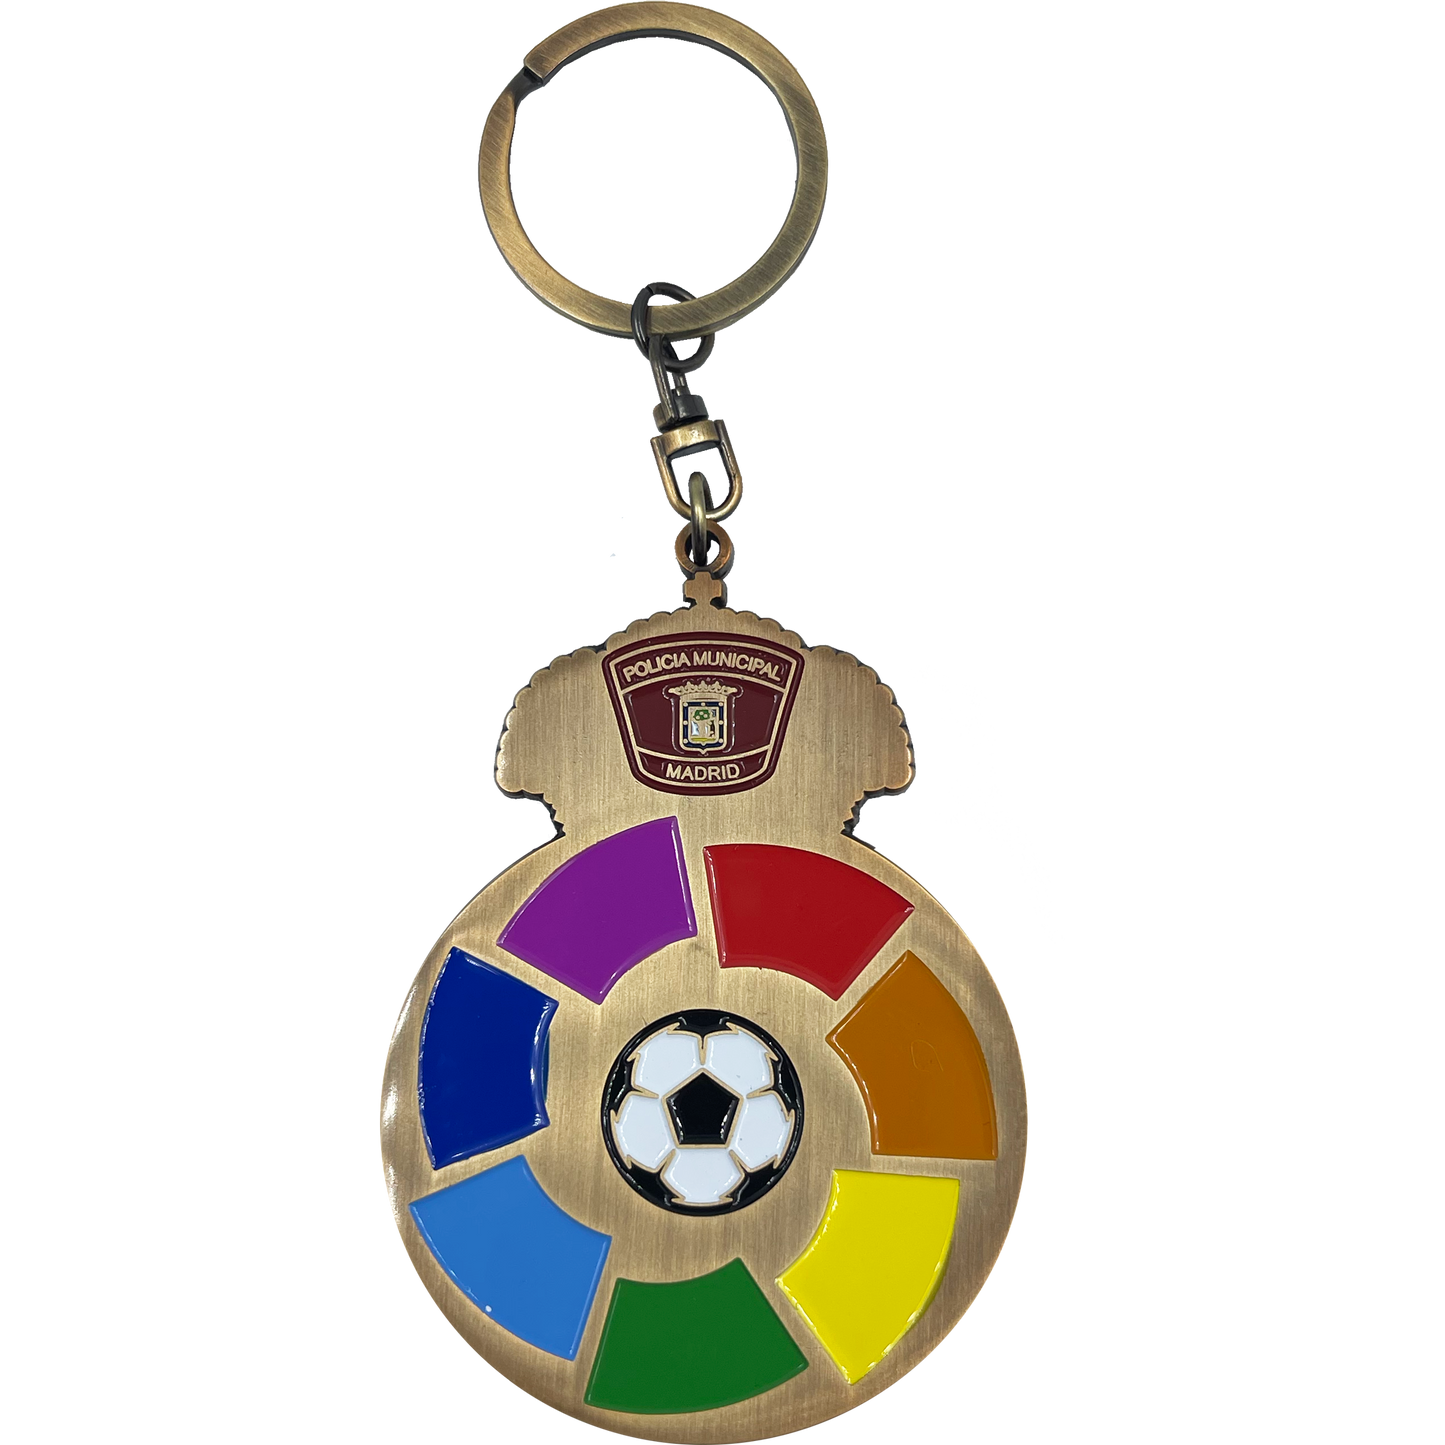 BL12-016 Real Madrid CF Futbol Soccer Policia Municipal Challenge Coin keychain